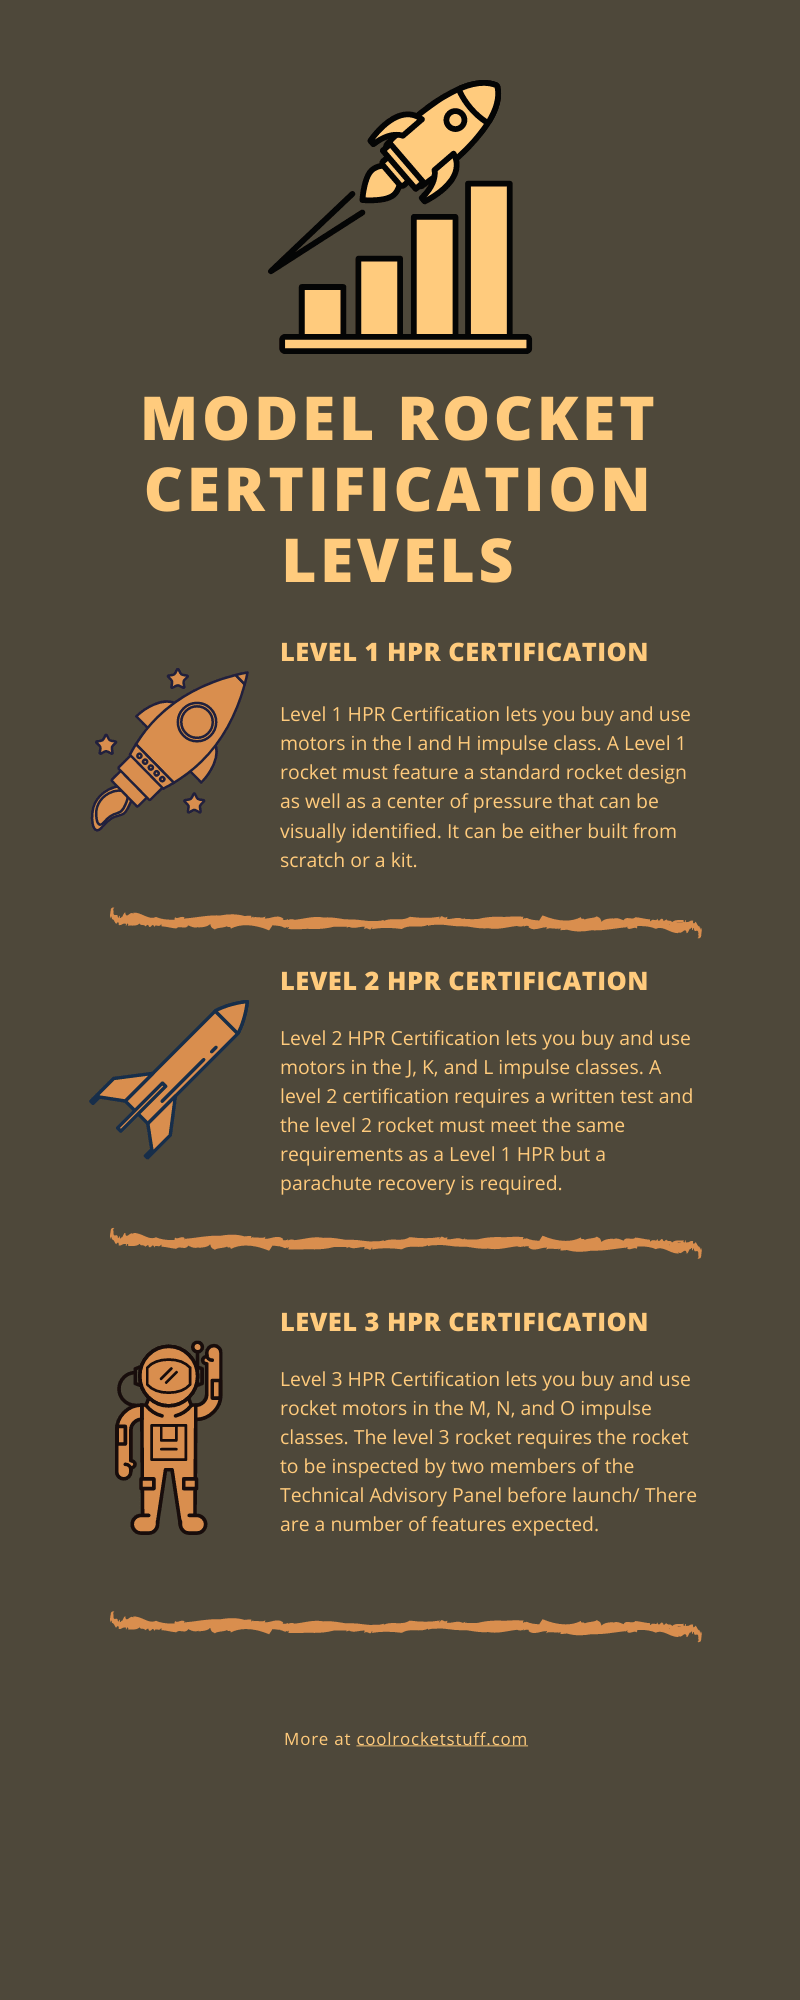 Model Rocket Certification Levels